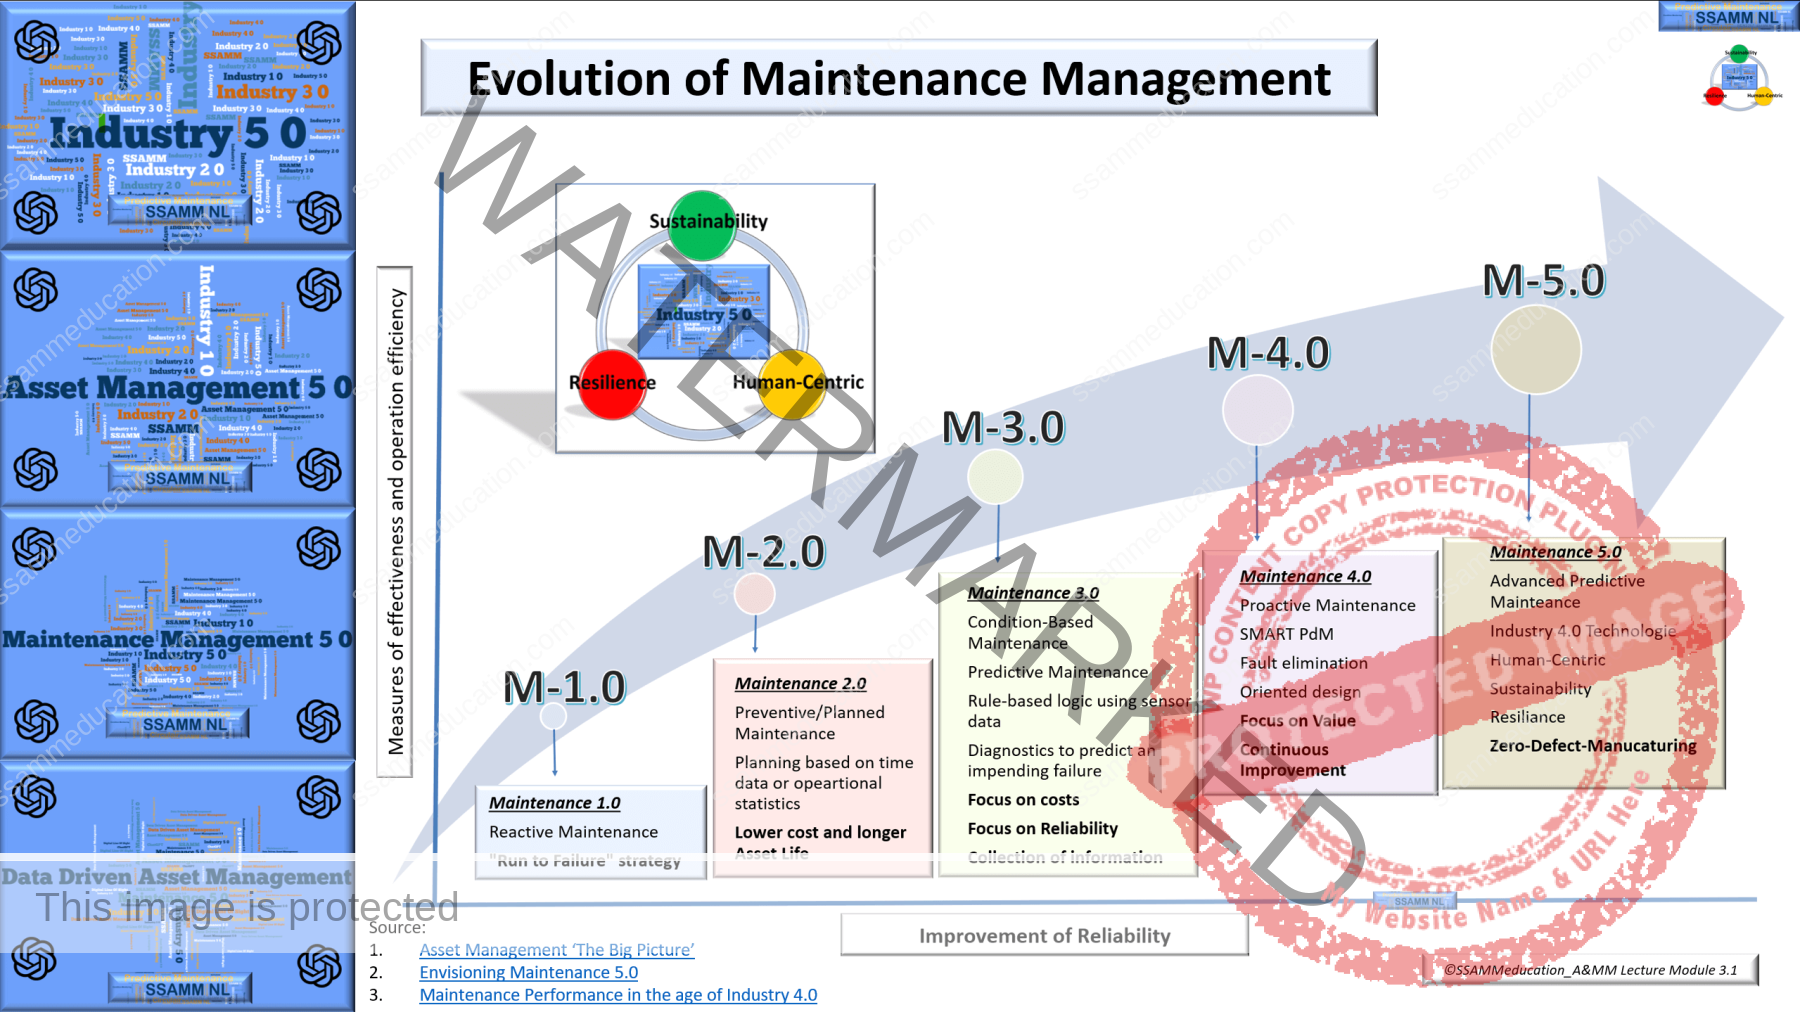 6.-Evolution-of-Maintenance-Management